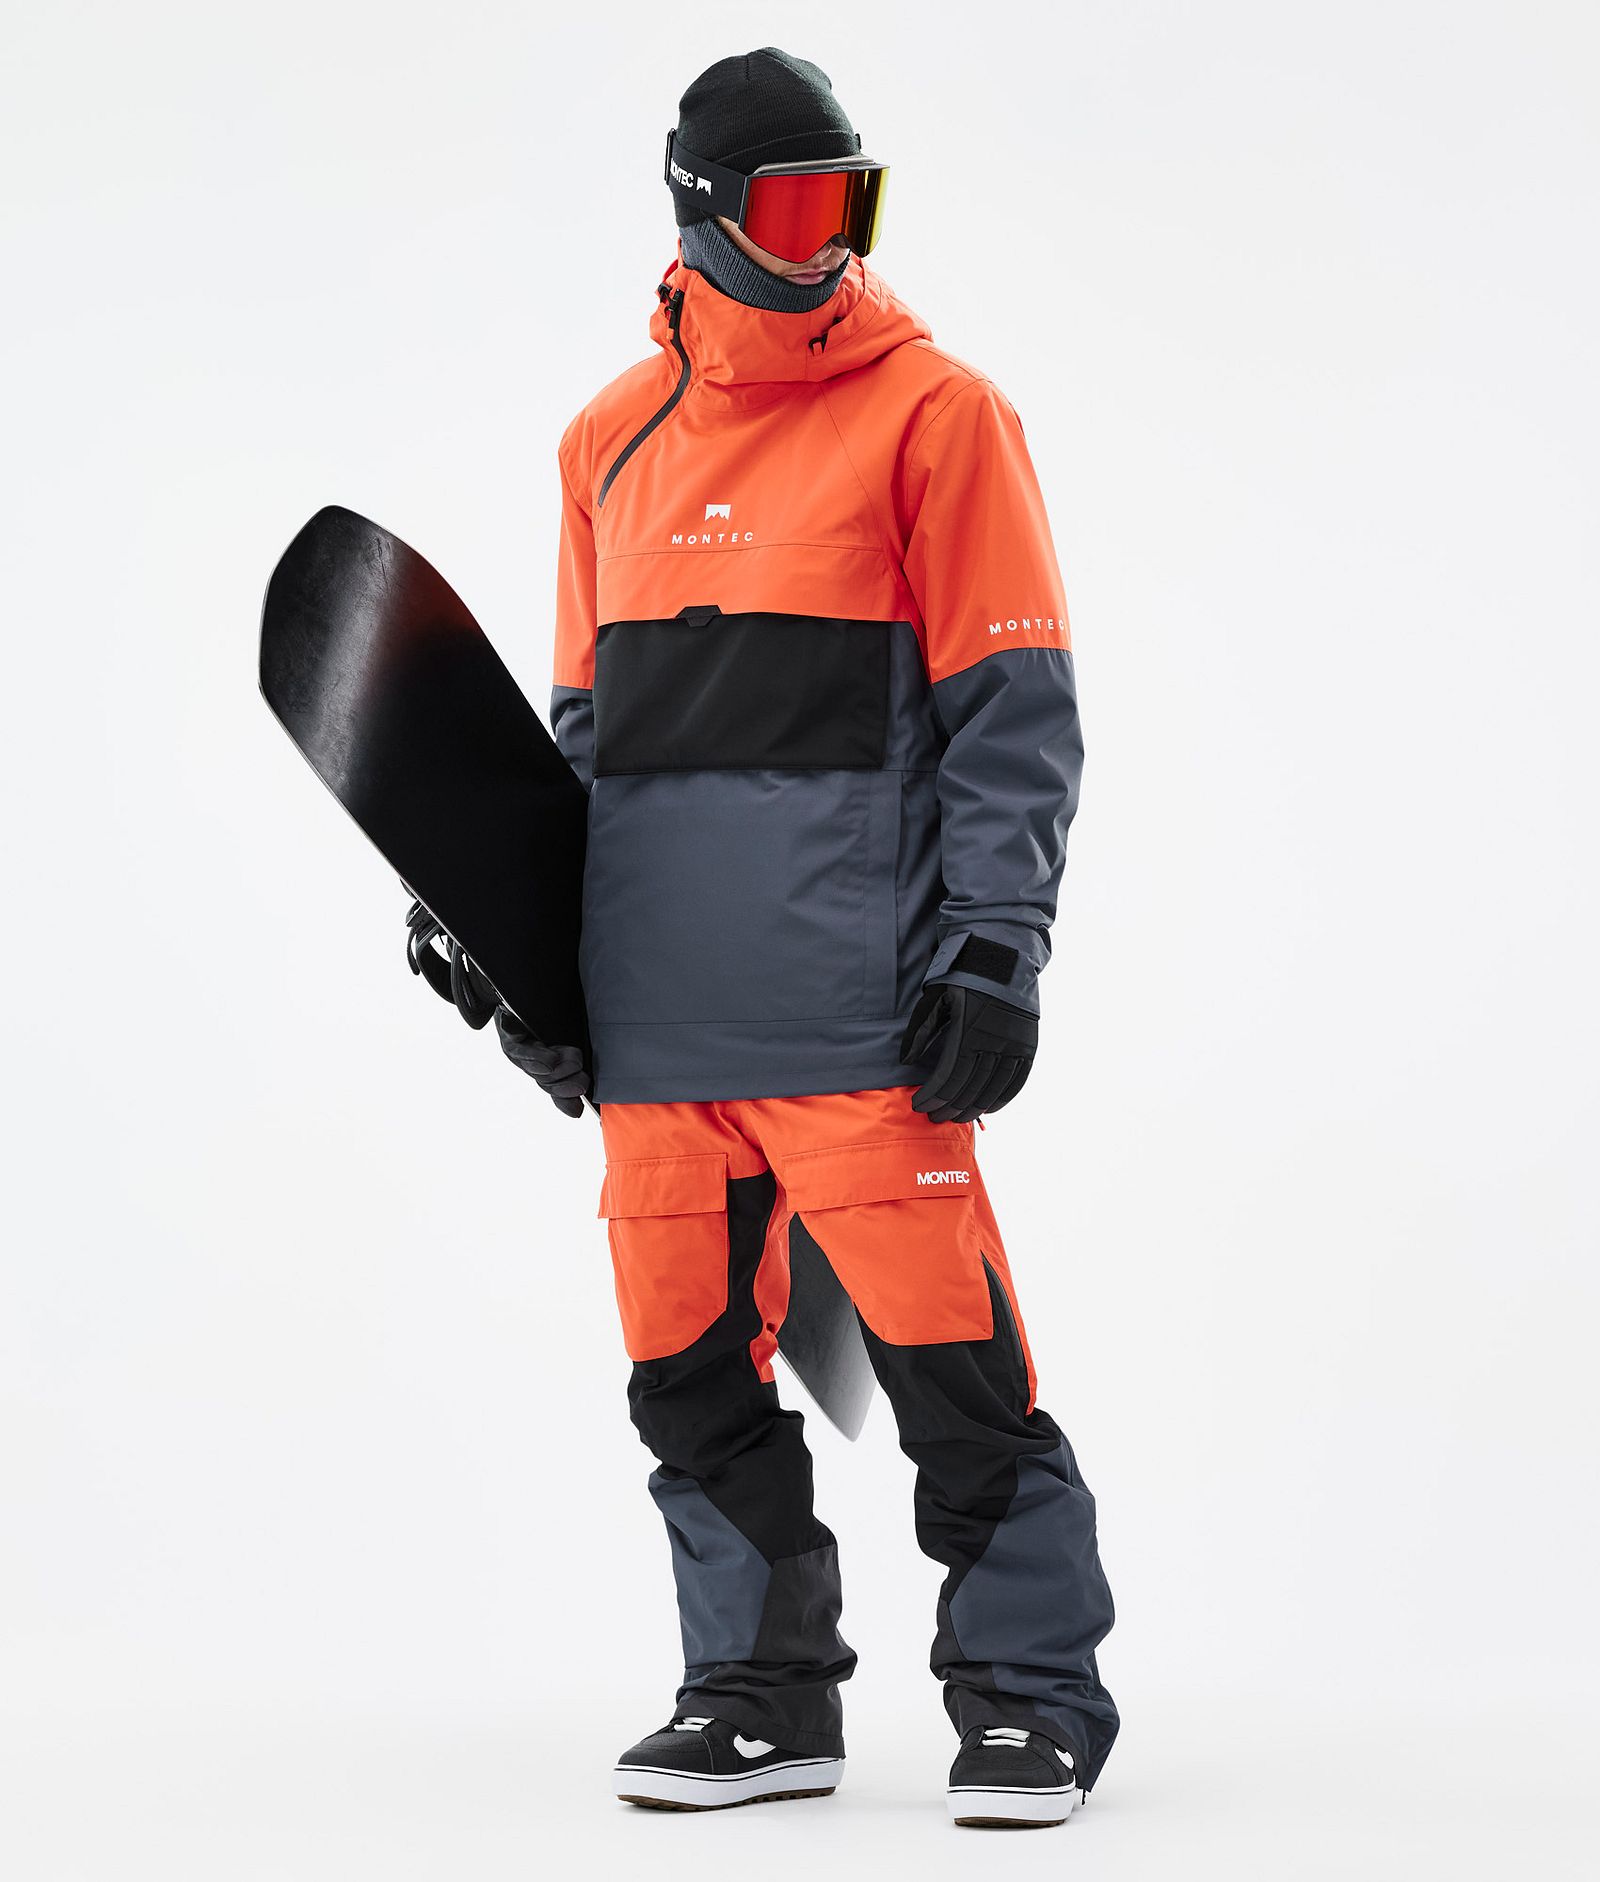 Montec Dune Snowboard Jacket Men Orange/Black/Metal Blue